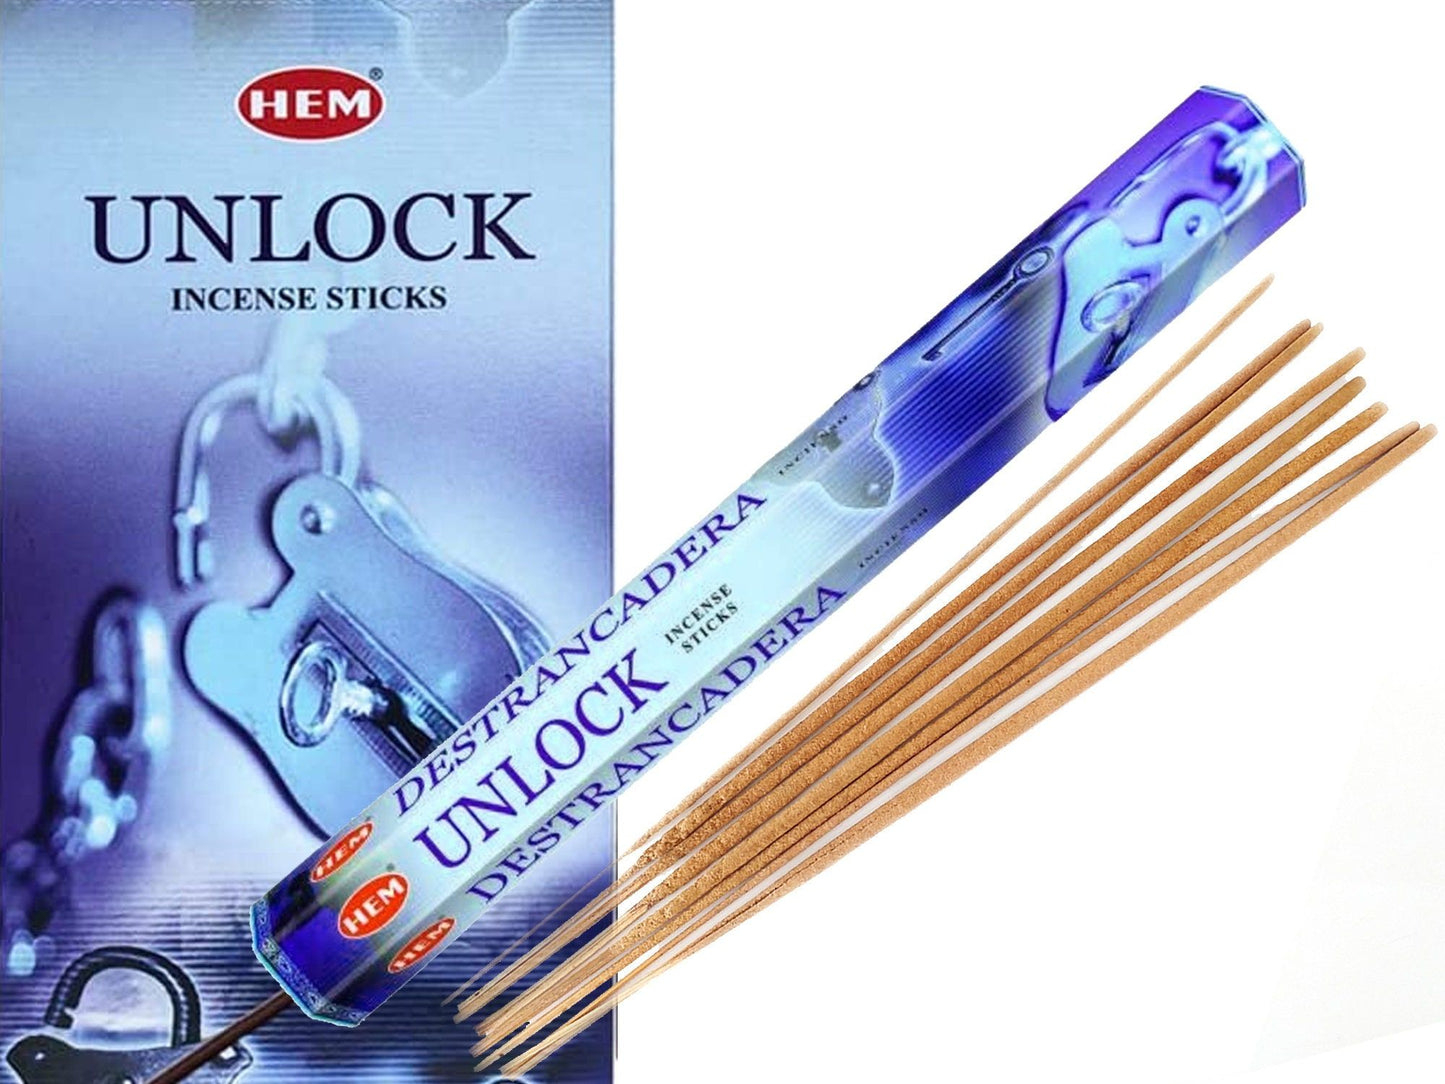 Hem UNLOCK 20 Incense Sticks per inner box (6/box)